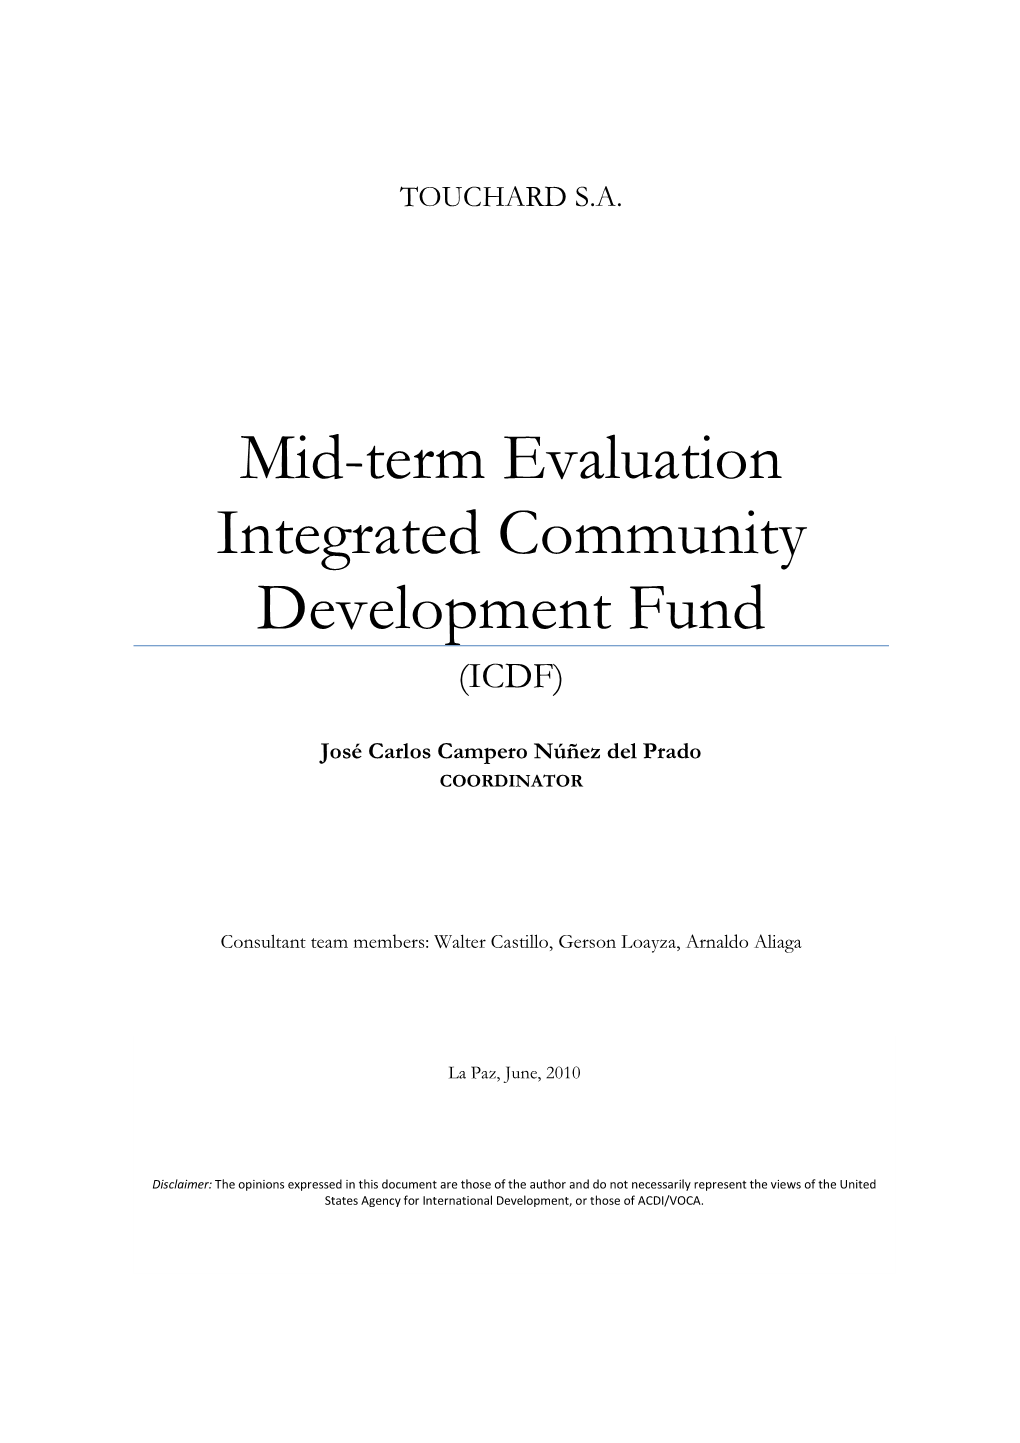 Mid-Term Evaluation Integrated Community Development Fund (ICDF)